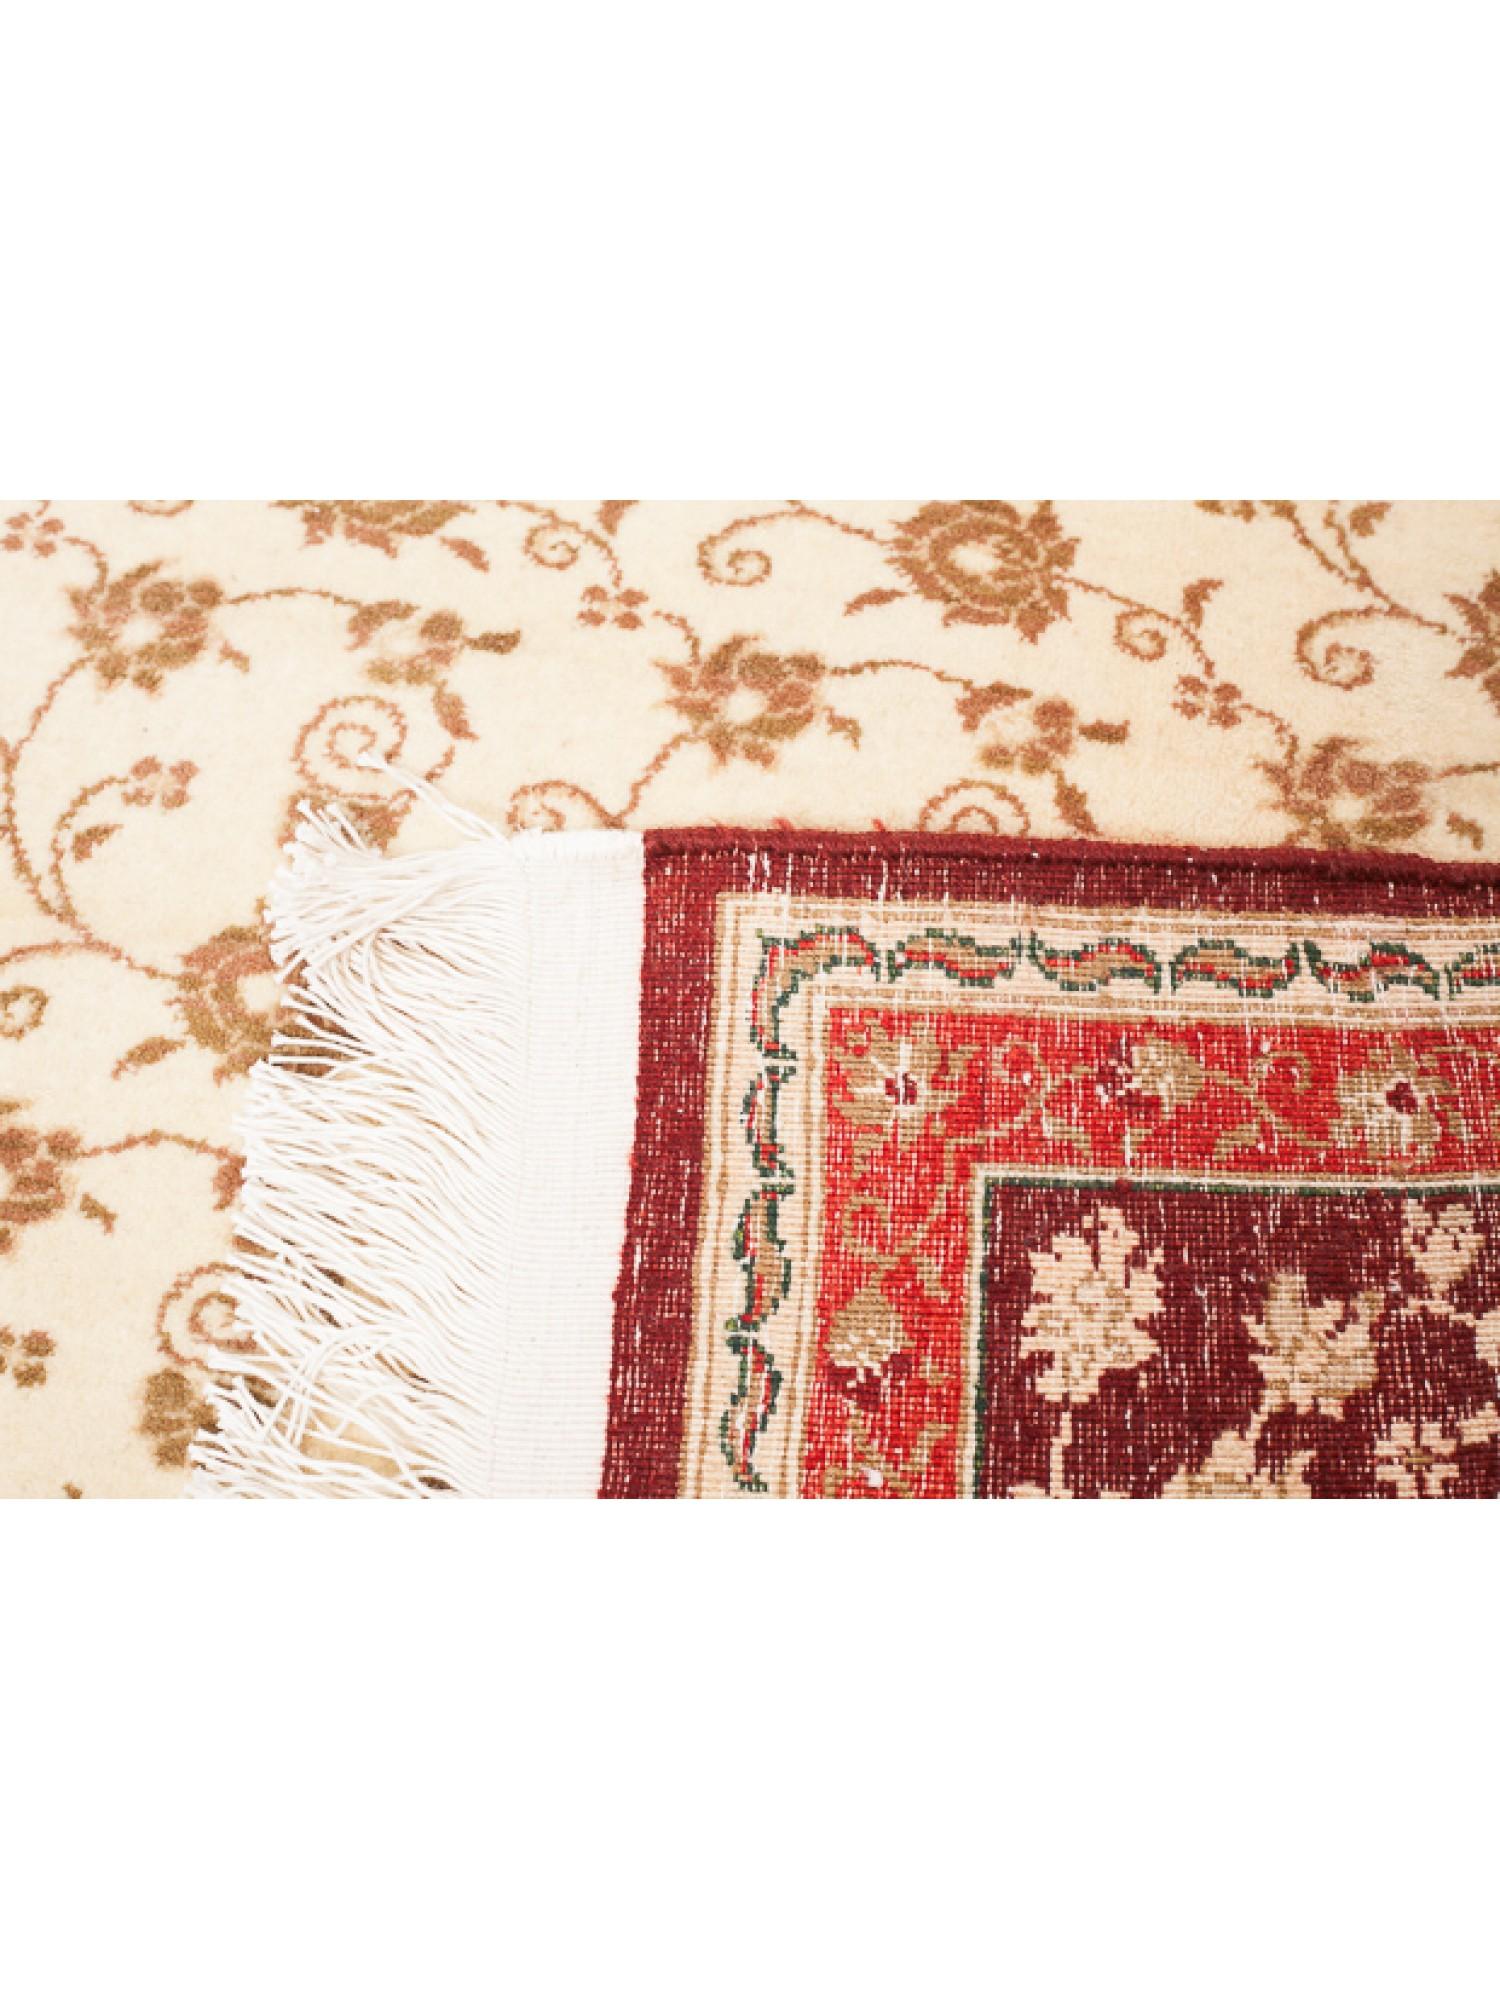 Hand-Woven Hereke Wool & Cotton Carpet, Turkish Anatolian Rug, Beige & Khaki Green Colors For Sale